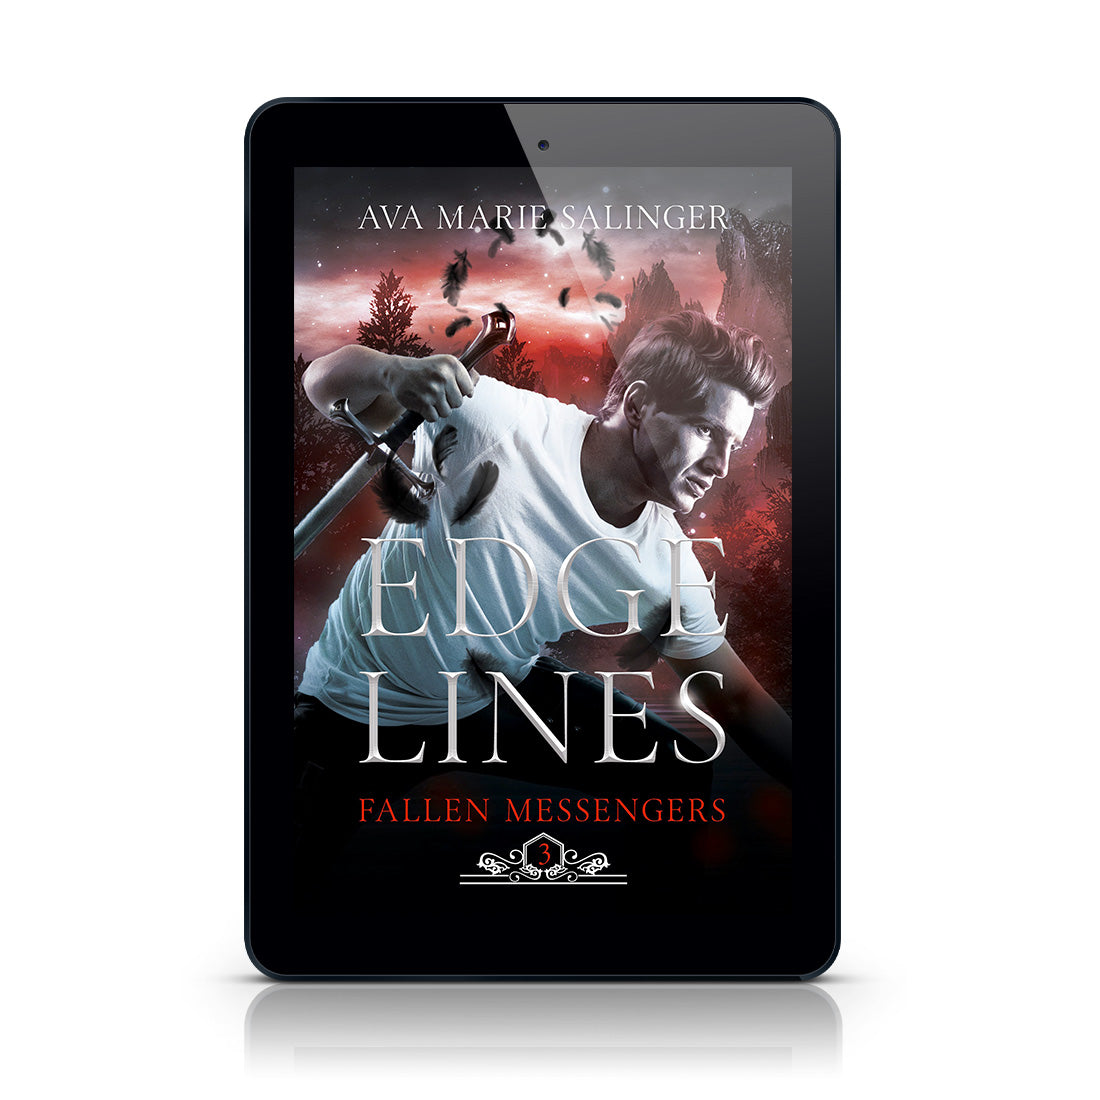 Edge Lines (Fallen Messengers Book 3) EBOOK gay romantic fantasy author ava marie salinger